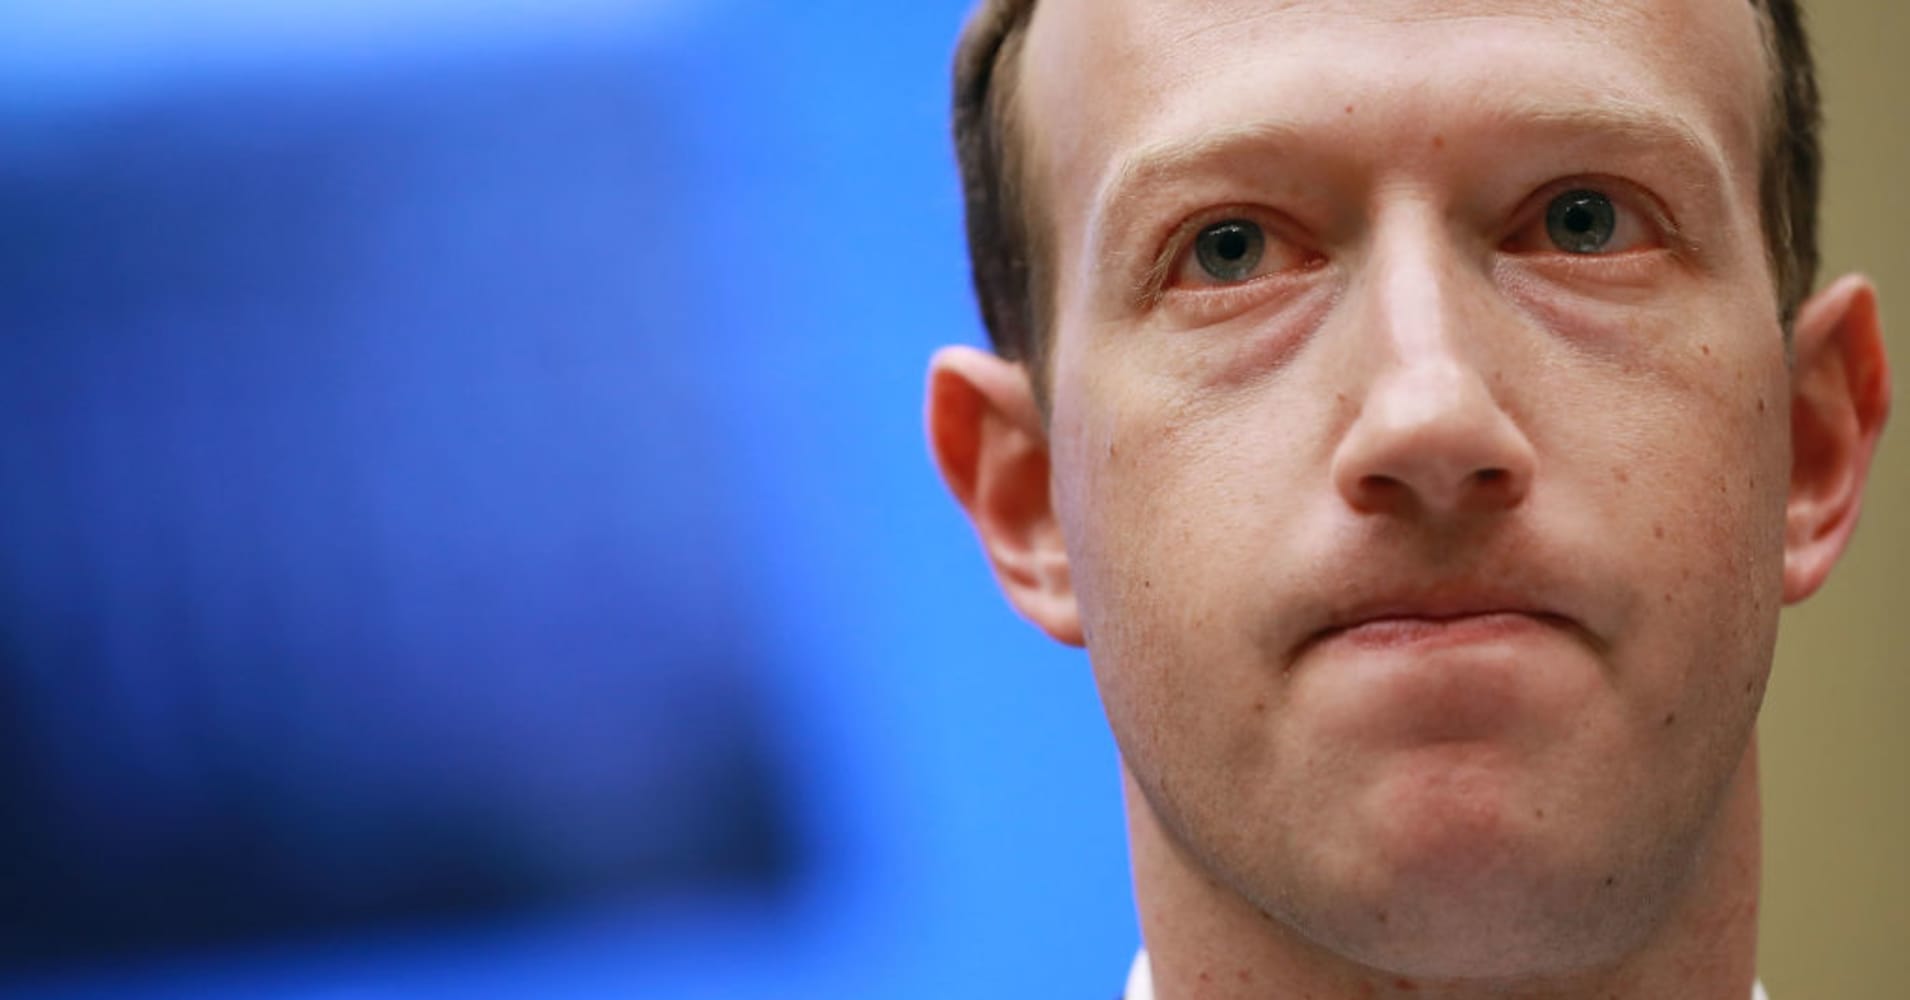 Former FTC official says Facebook VP misled international leaders